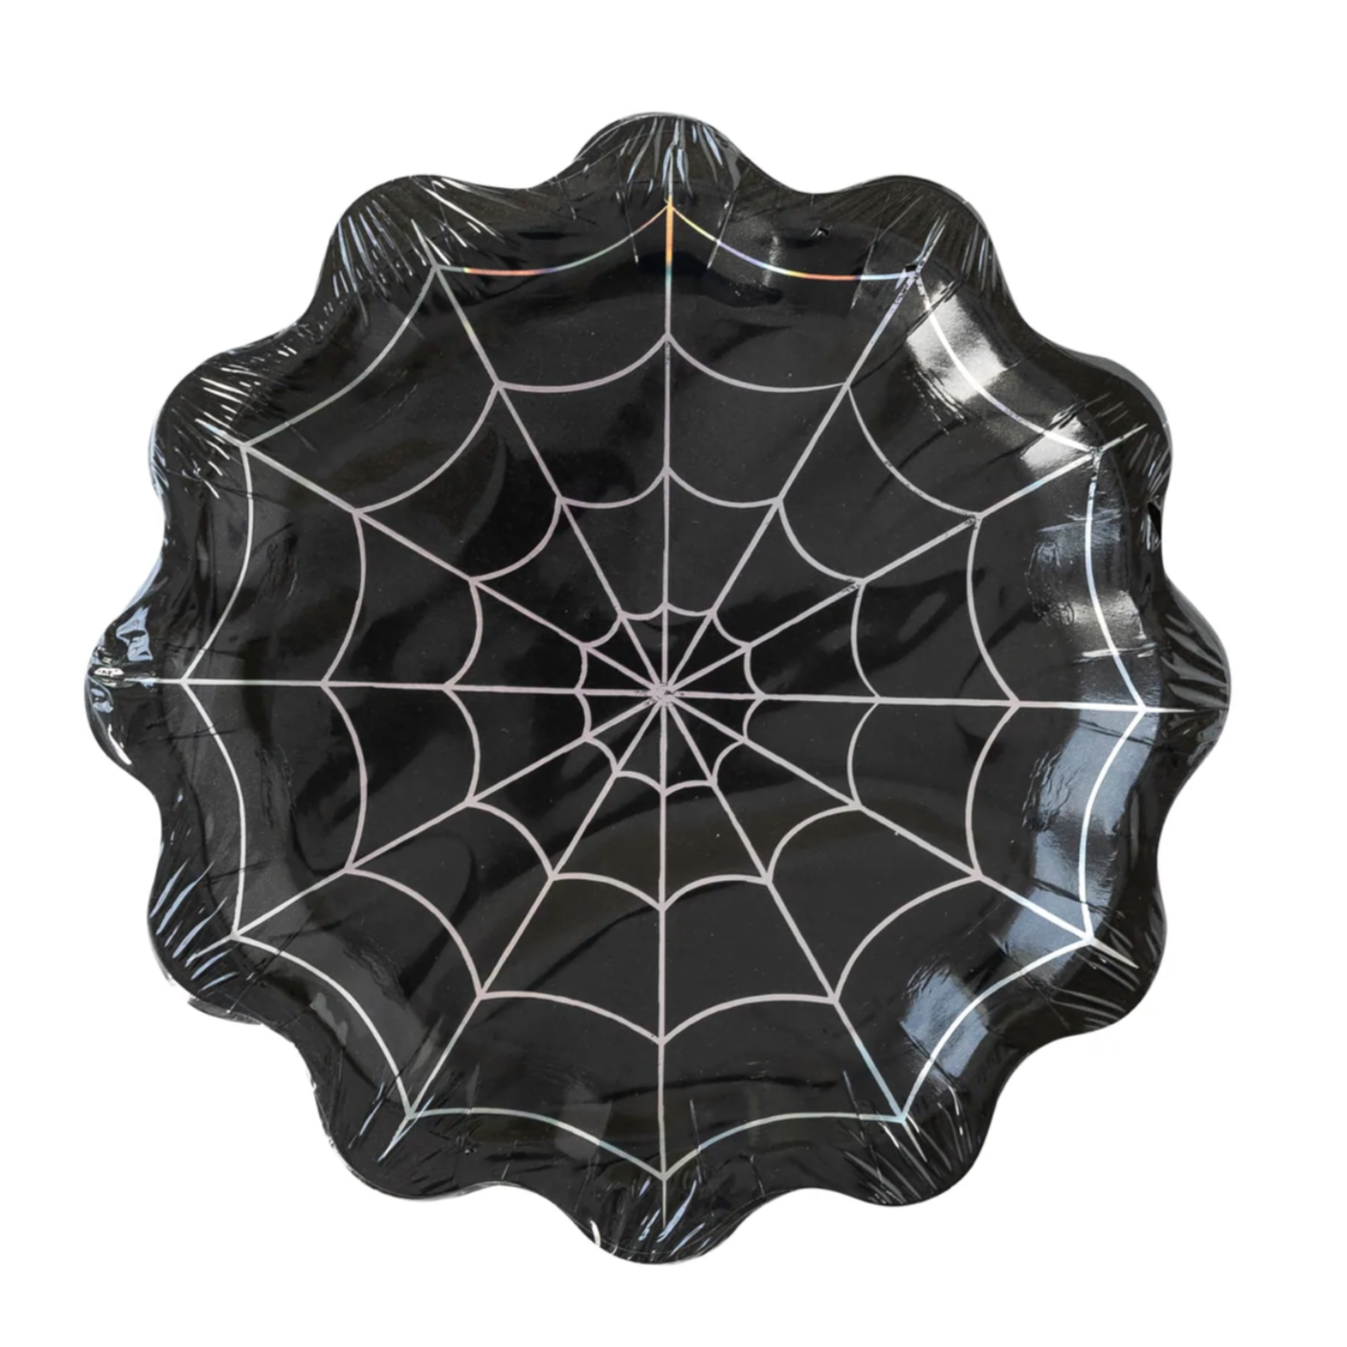 Holographic Web Shaped 9" Plates